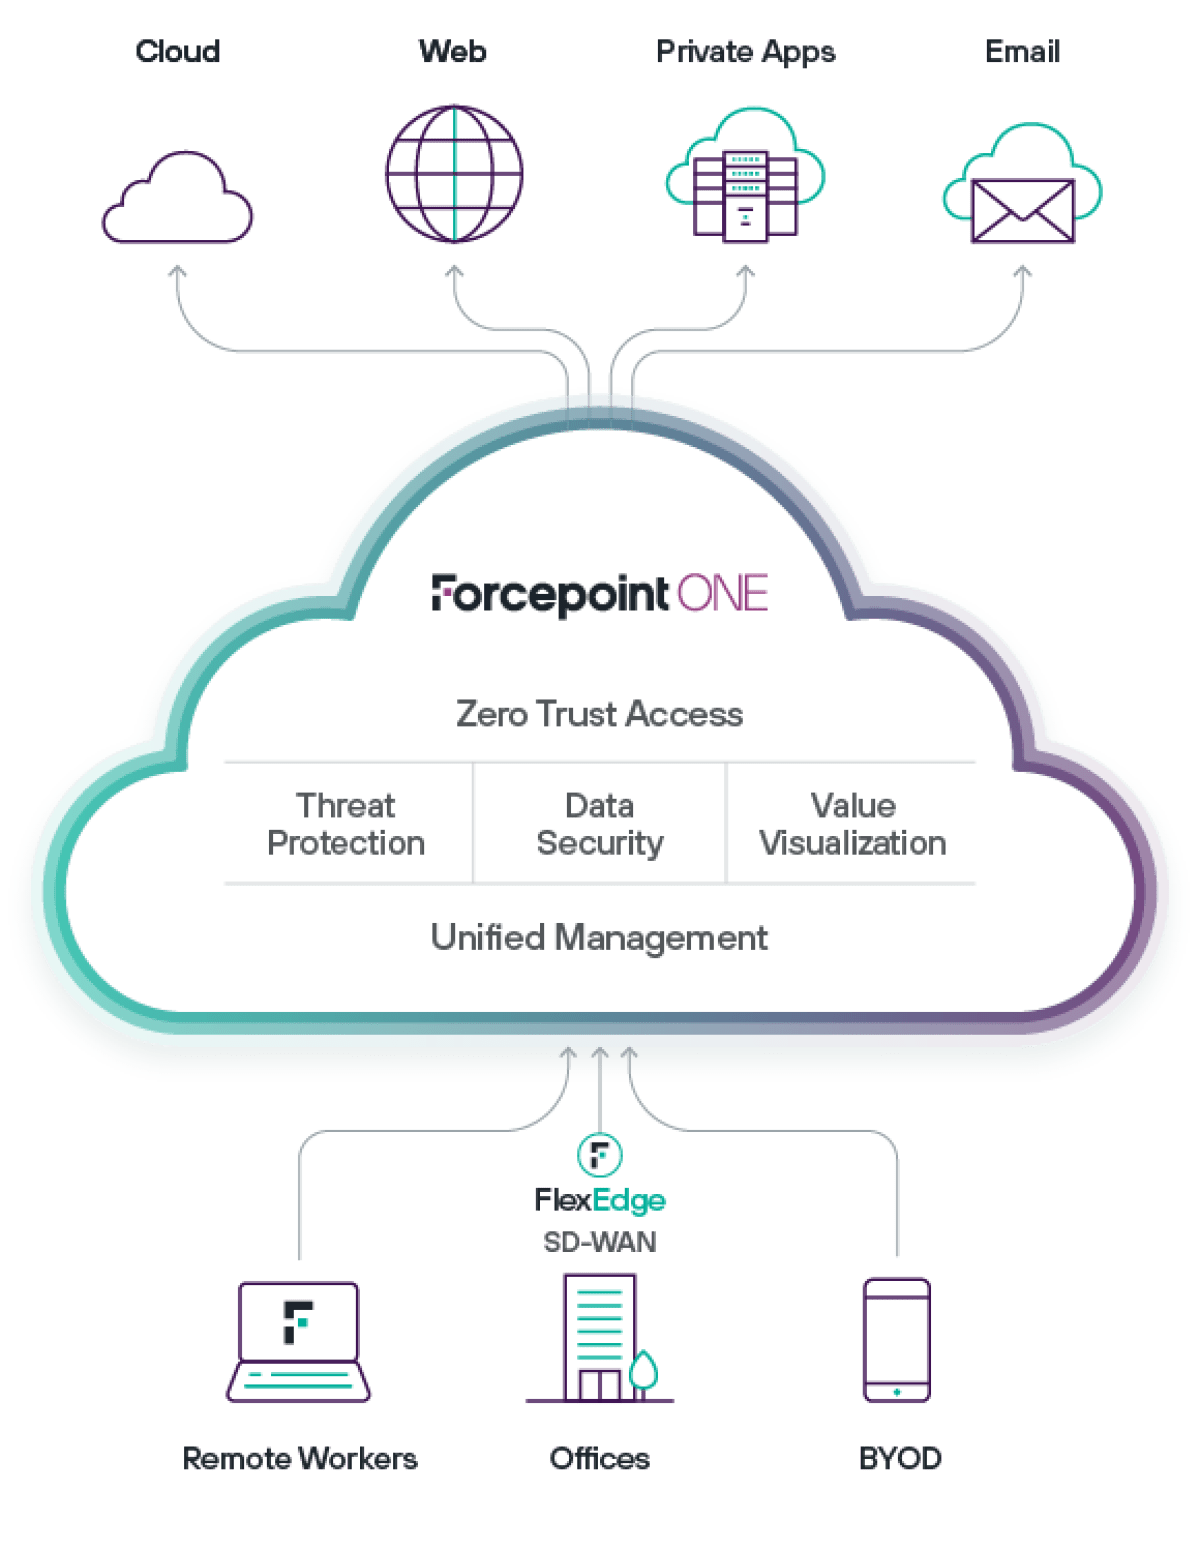 Forcepoint ONE은 통합 콘솔에서 Security Services Edge(SSE)를 제공하는 클라우드 네이티브 플랫폼입니다.